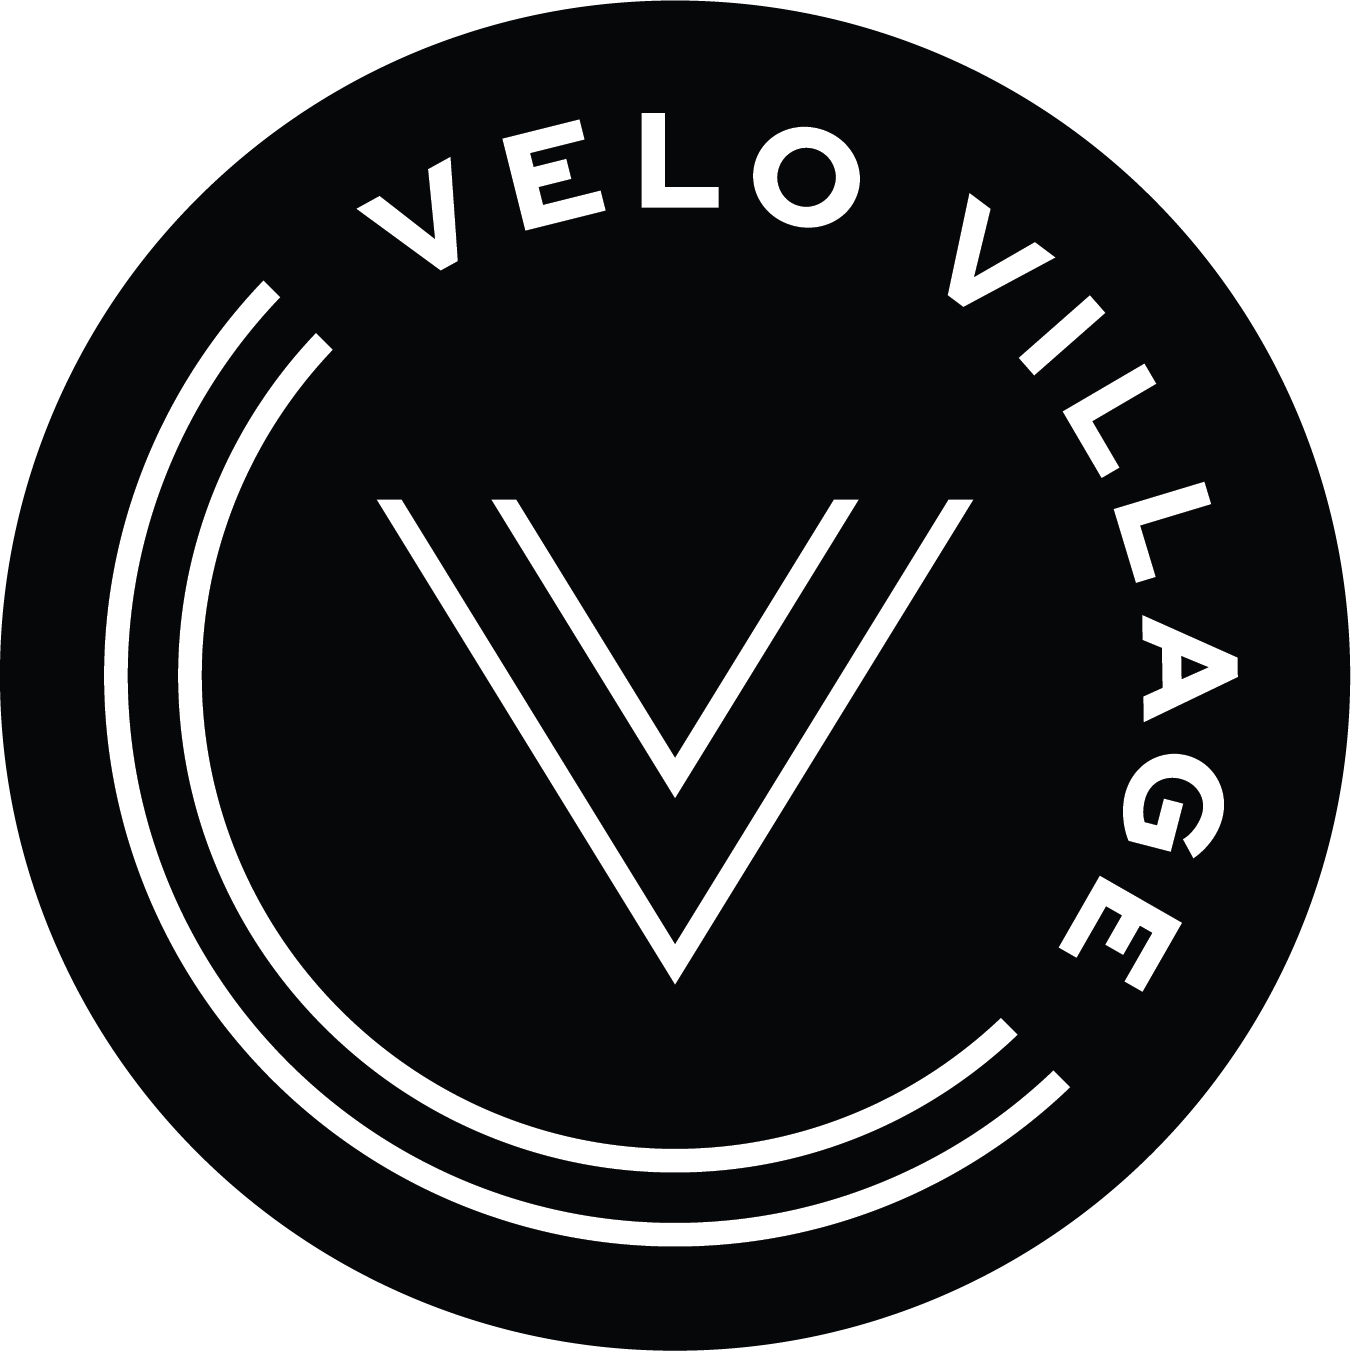 Velo Village Logo_two lines_black (002).png